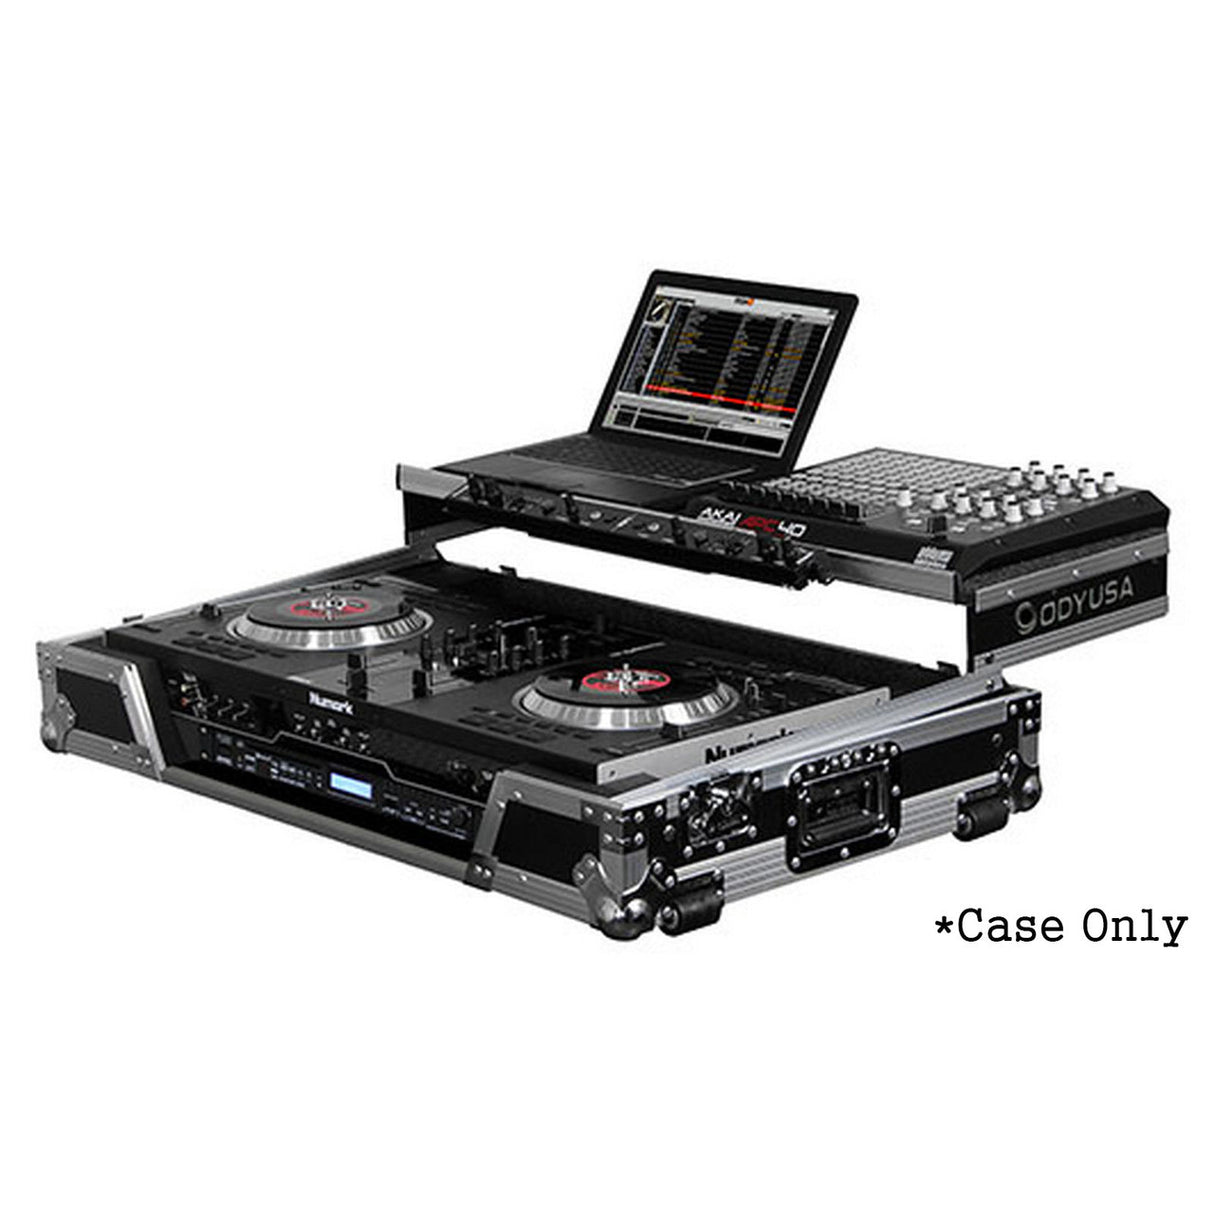 Odyssey Cases FZGSNS7WFXX1 | Glide Style DJ Controller Case for NUMARK NS7 NSFX